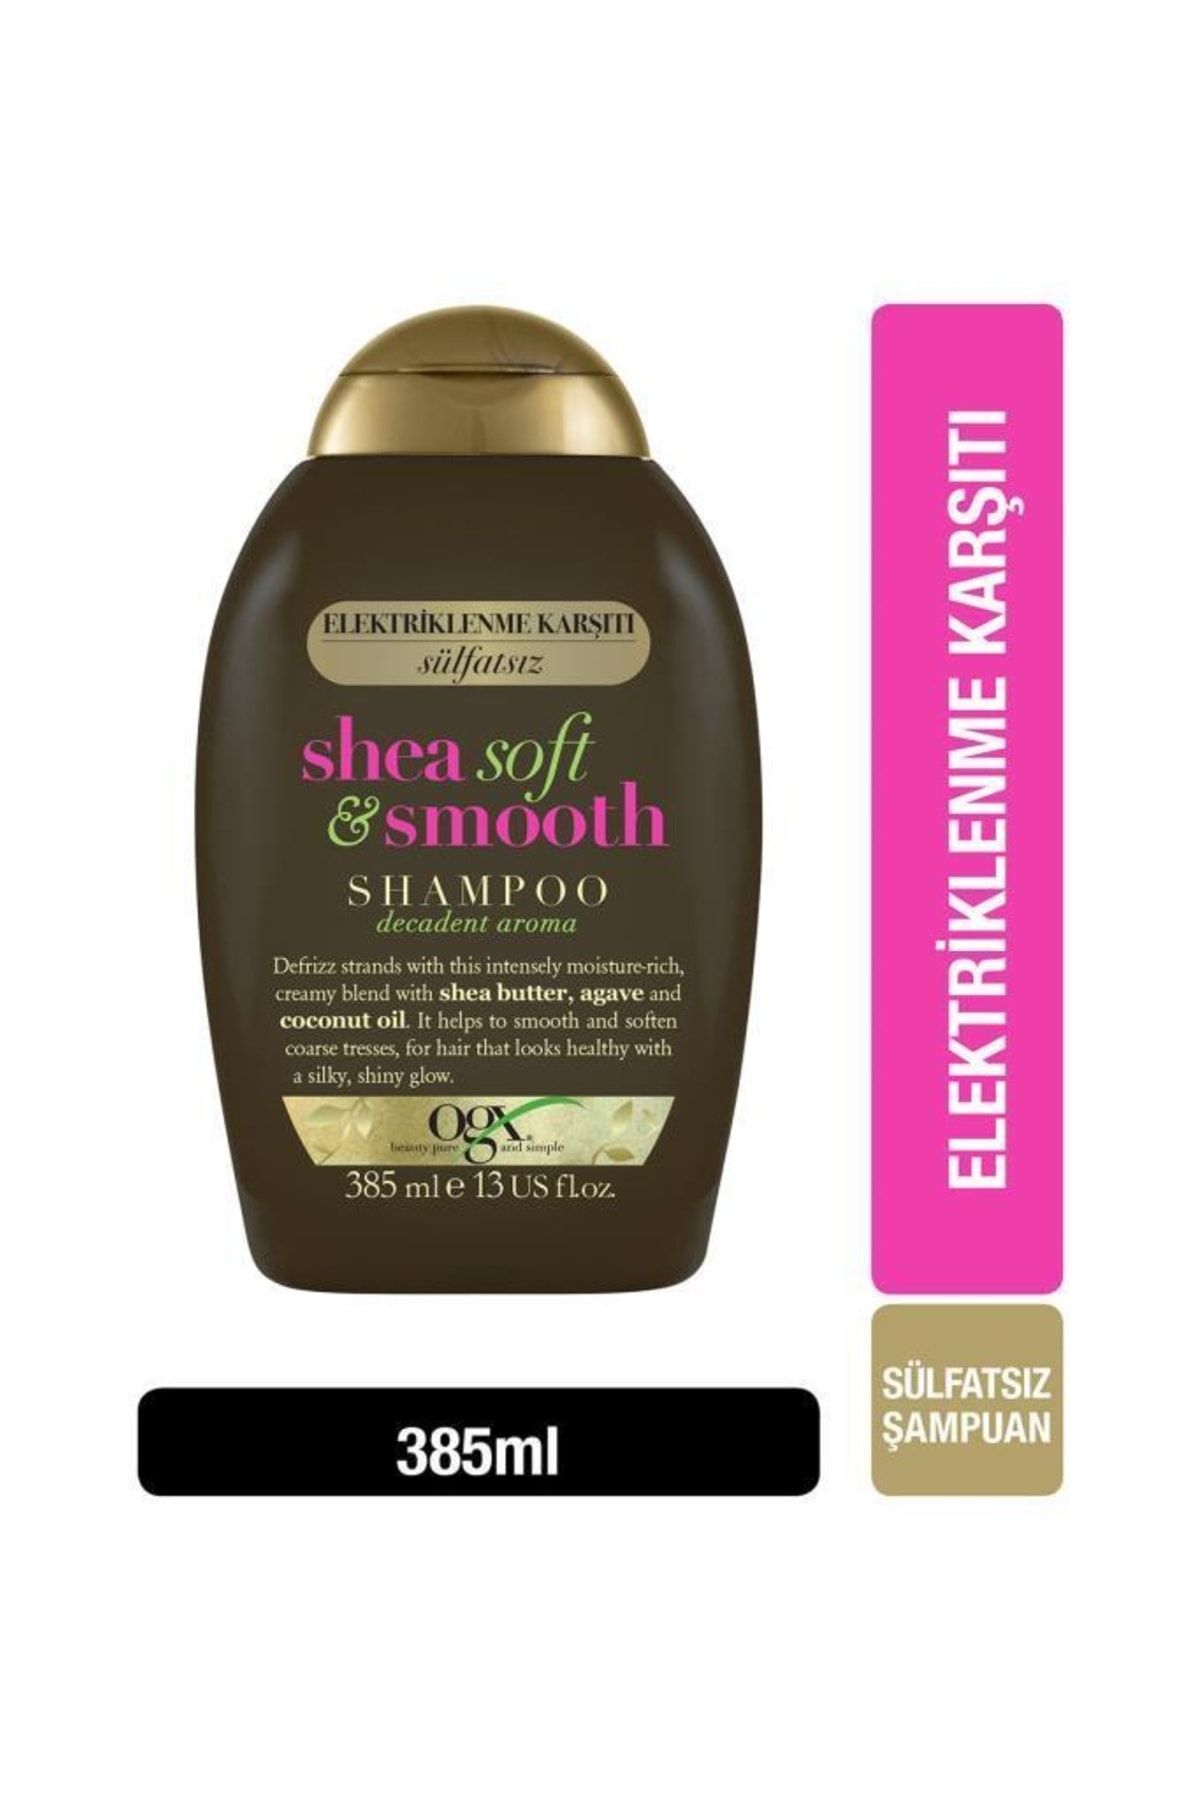 OGX Elektriklenme Karşıtı Shea Soft&Smooth Sülfatsız Şampuan 385 ml